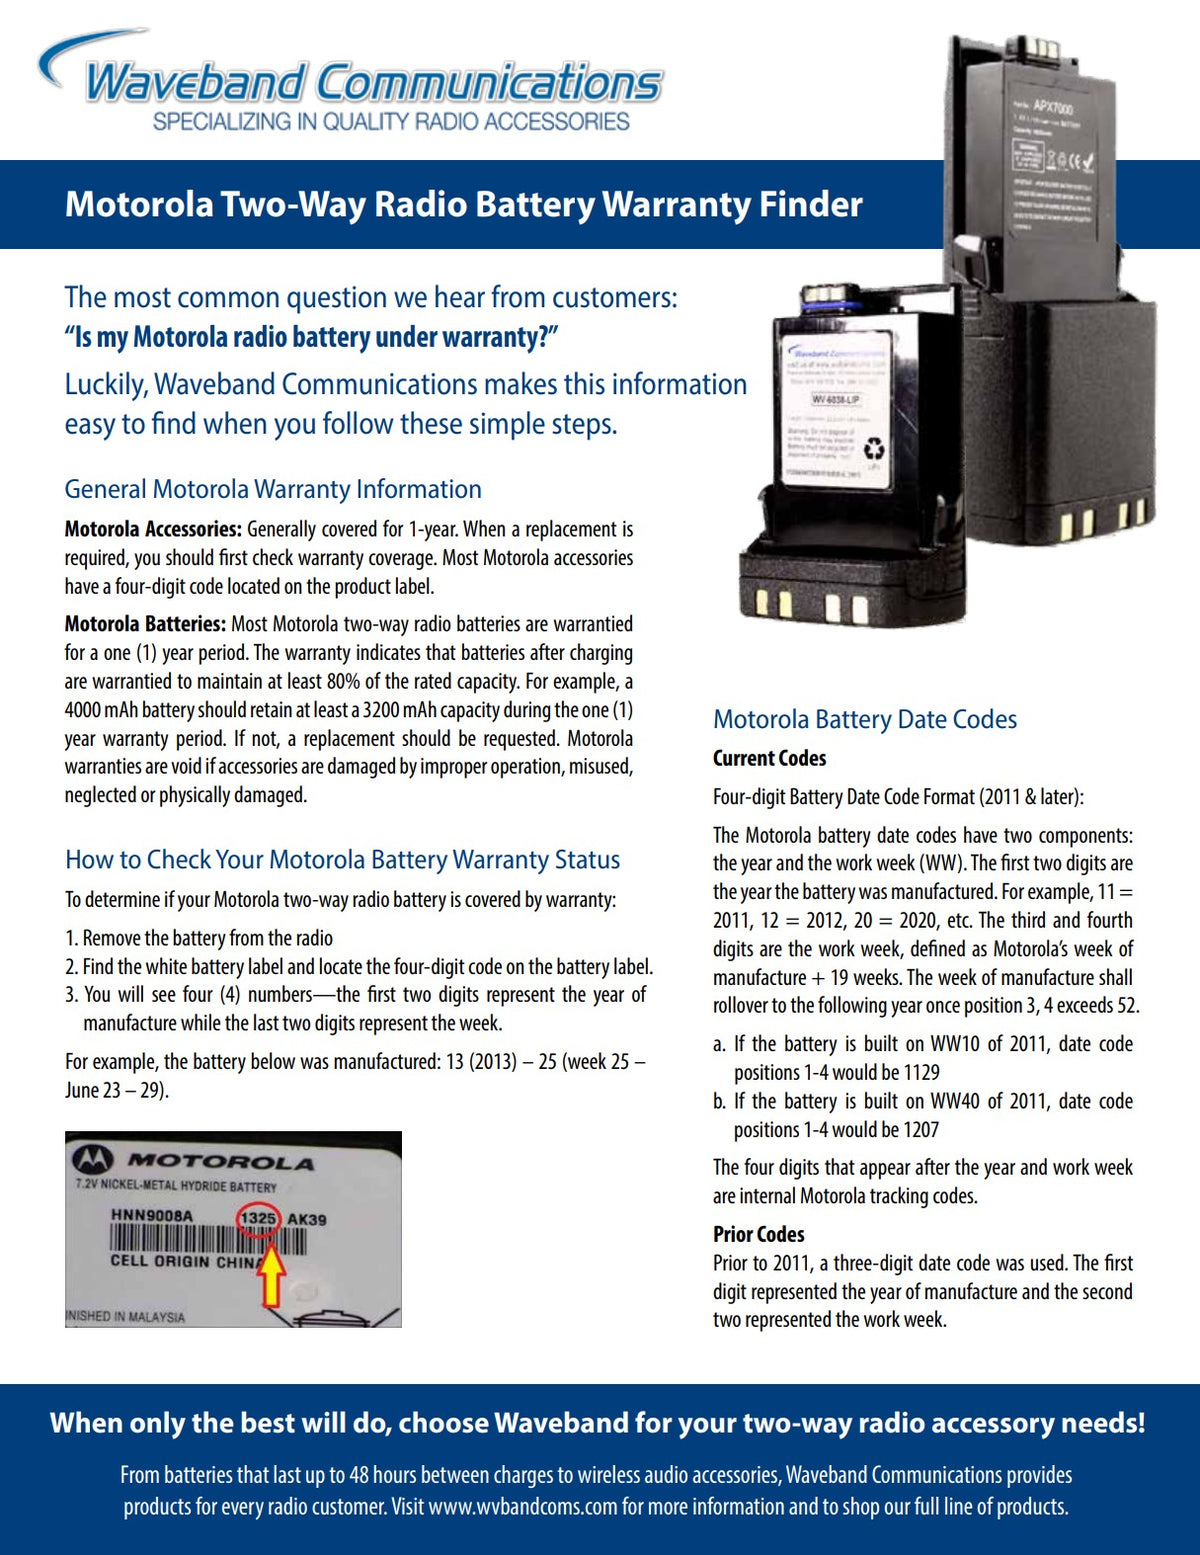 How to Determine the Warranty of Motorola Battery